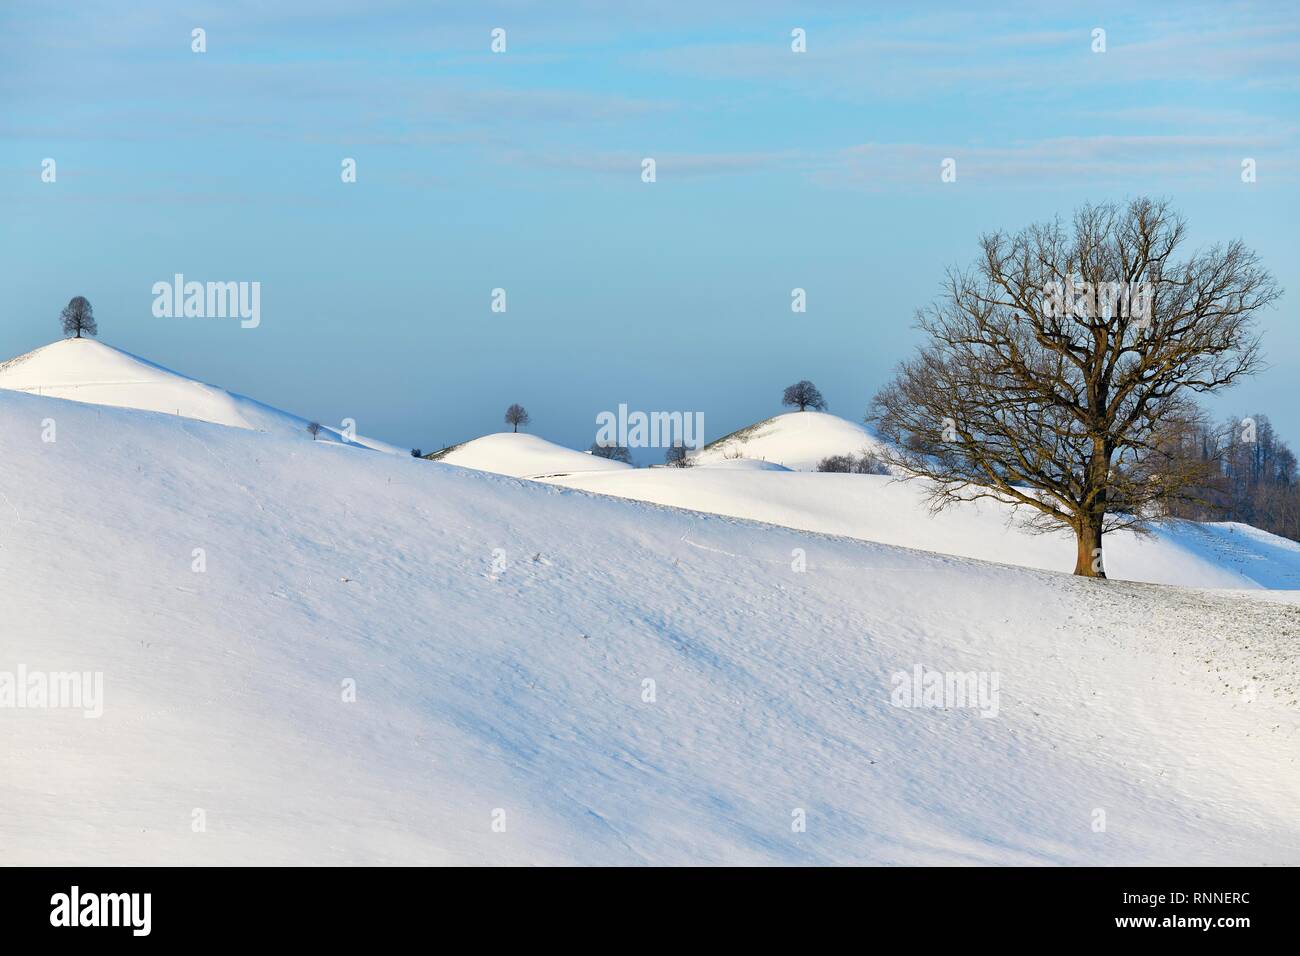 Snow-covered moraine landscape, with Linden trees (Tilia) on hills, Hirzel, Canton Zurich, Switzerland Stock Photo